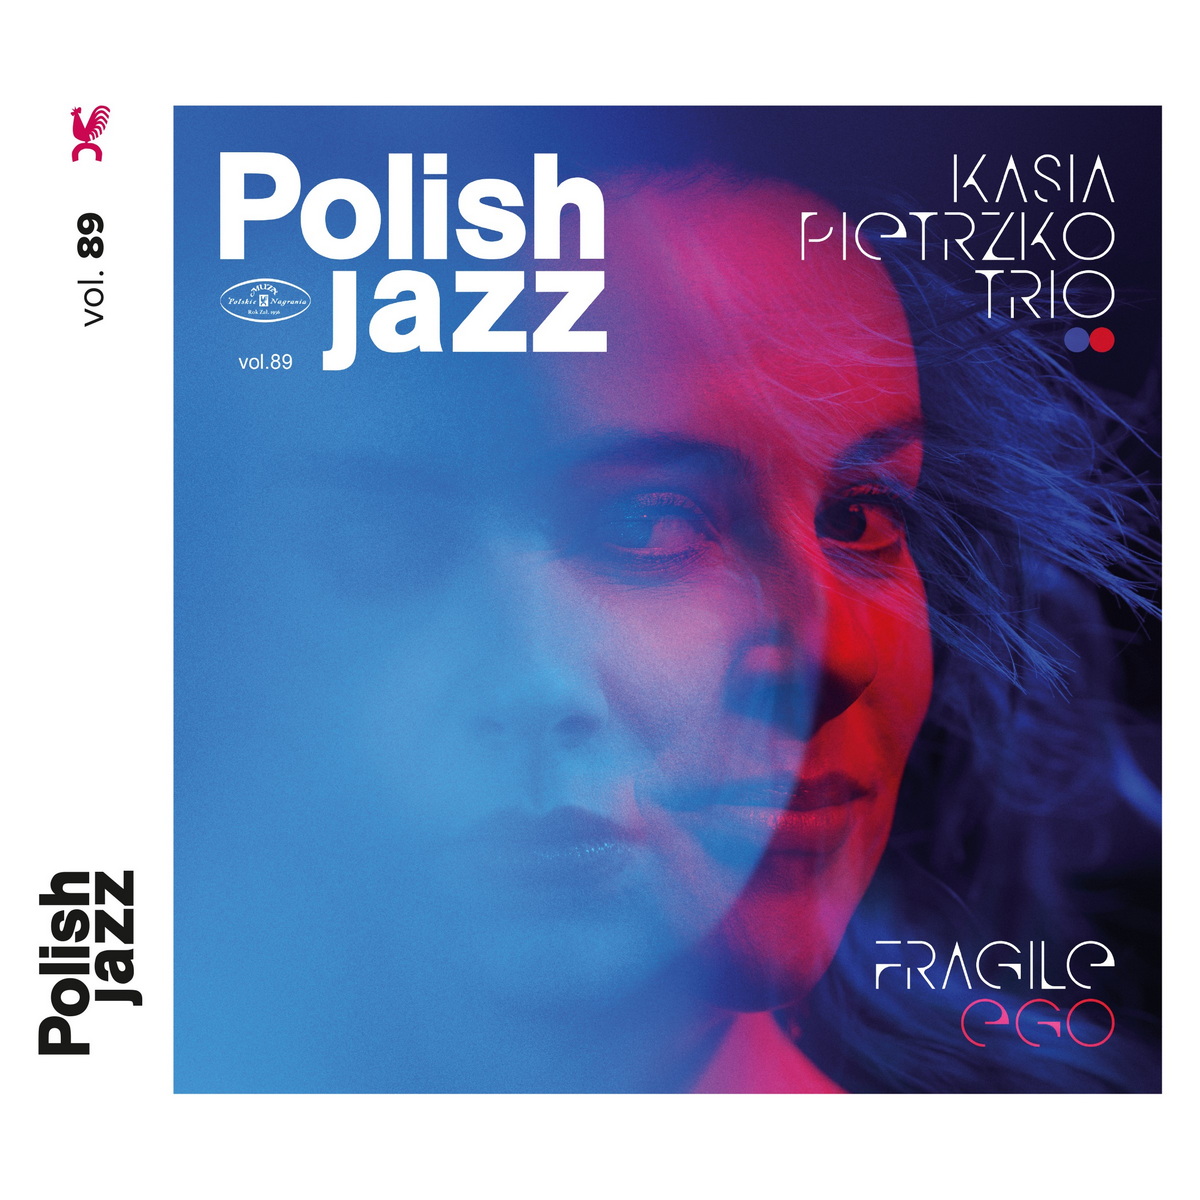 KASIA PIETRZKO TRIO „Fragile Ego” ⸜ Polish Jazz vol. 89